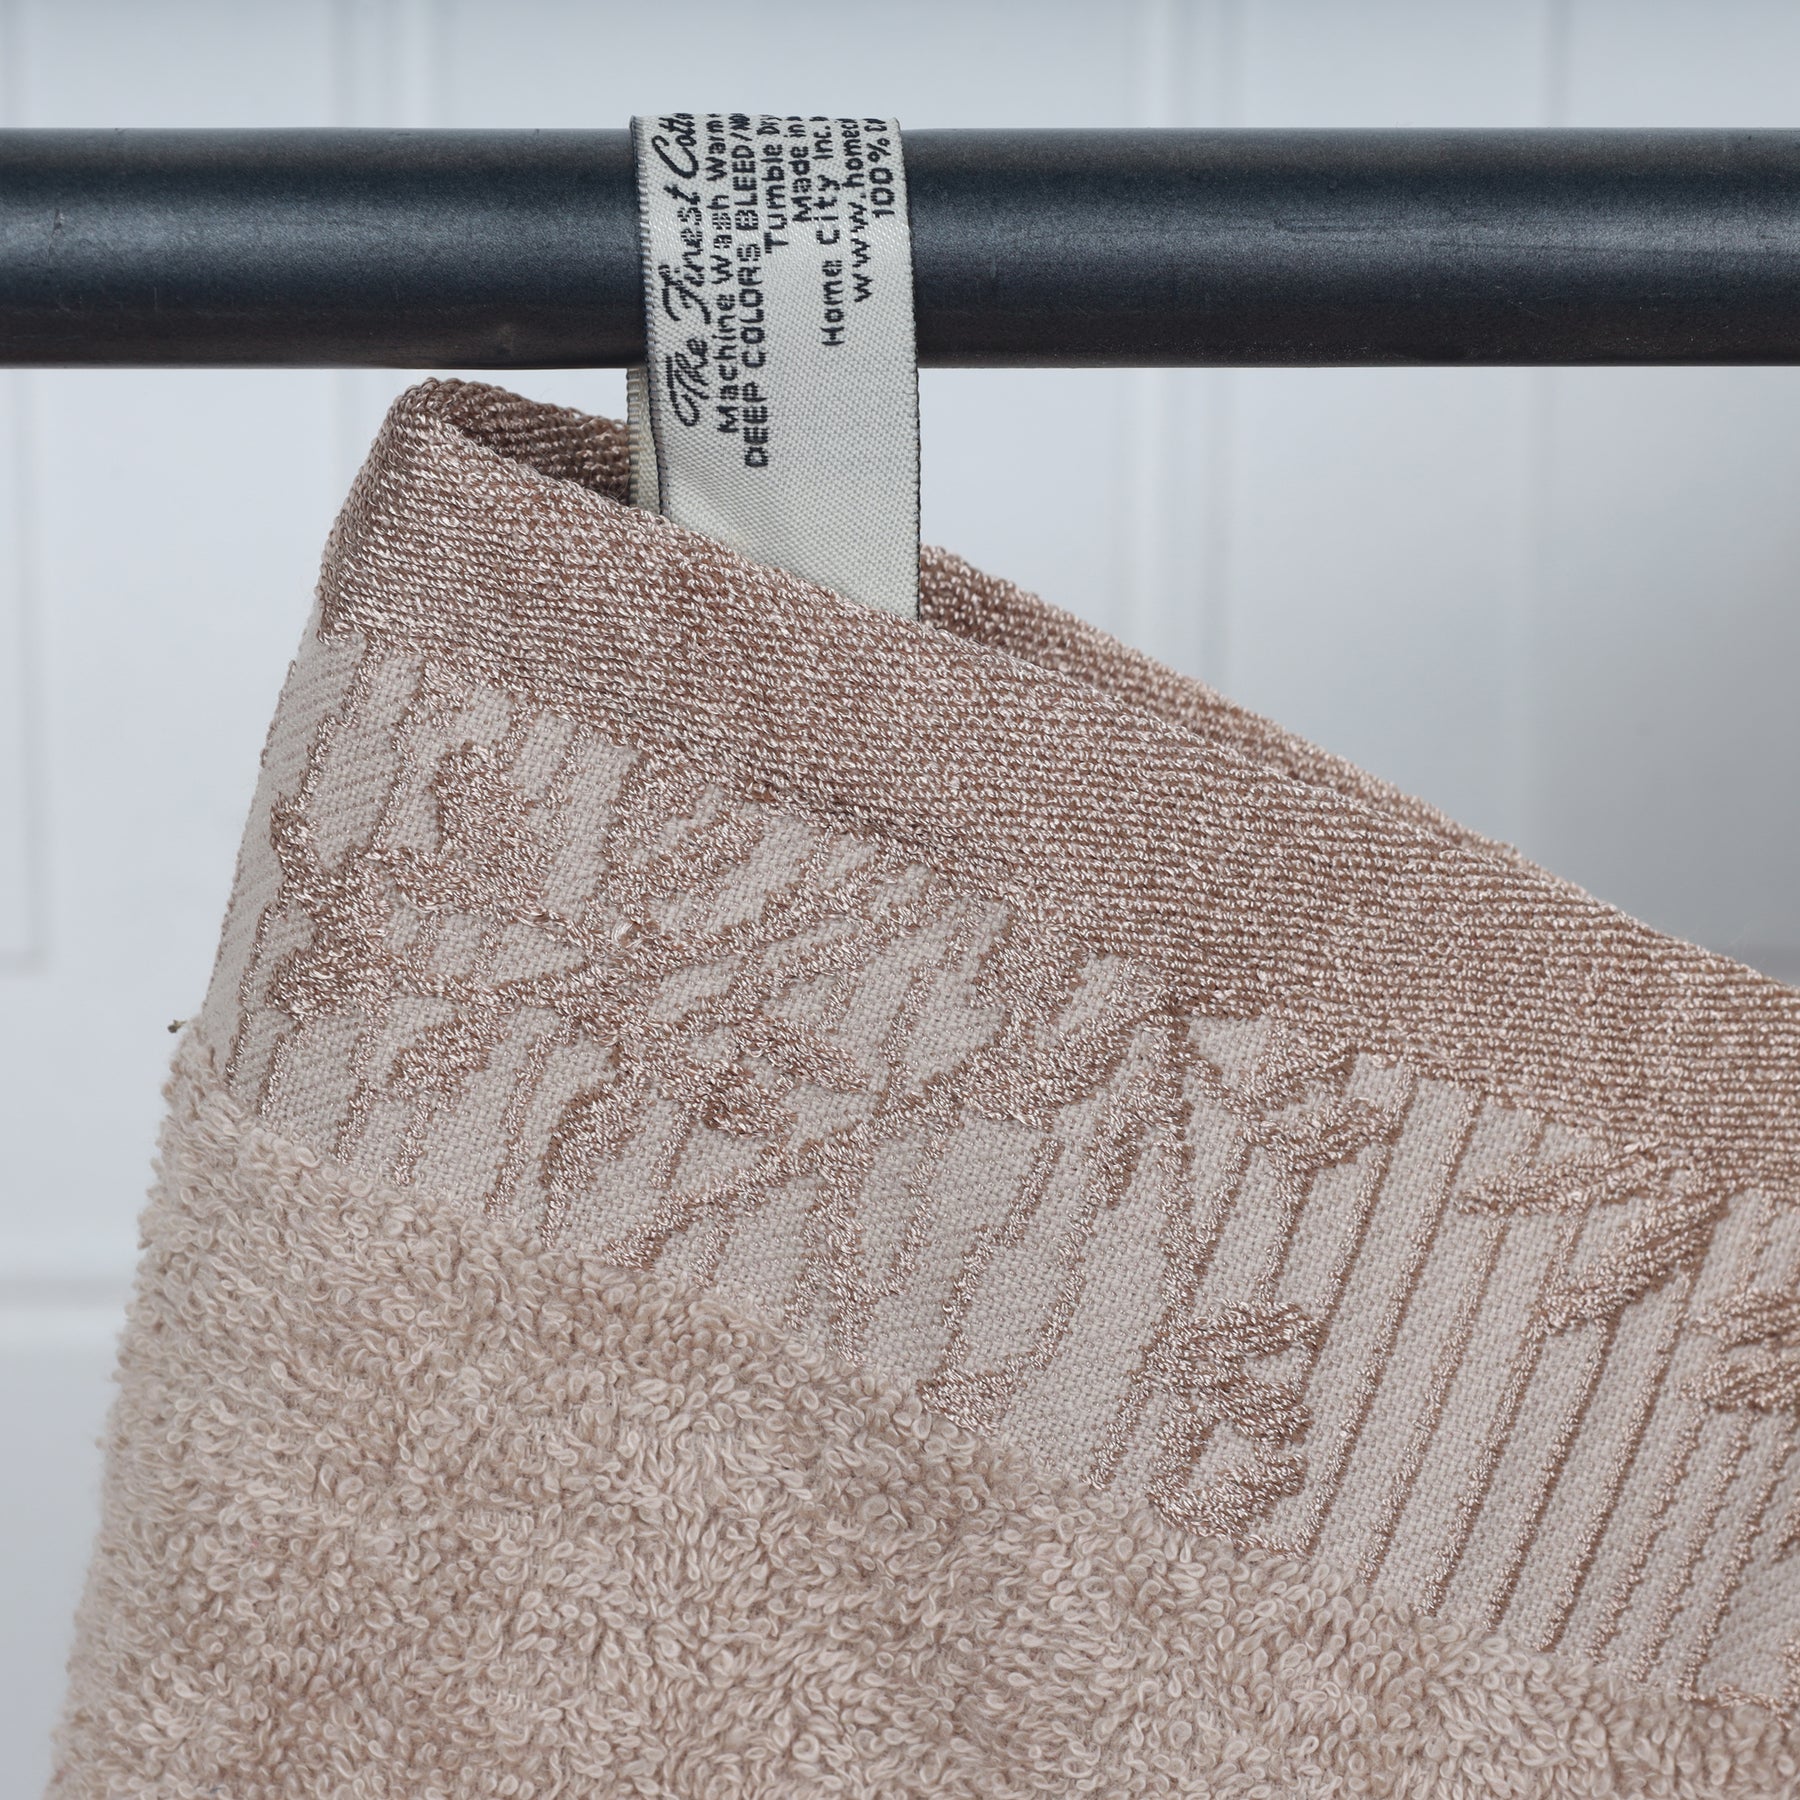 Superior Wisteria Cotton Floral Jacquard 6 Piece Towel Set - Frappe